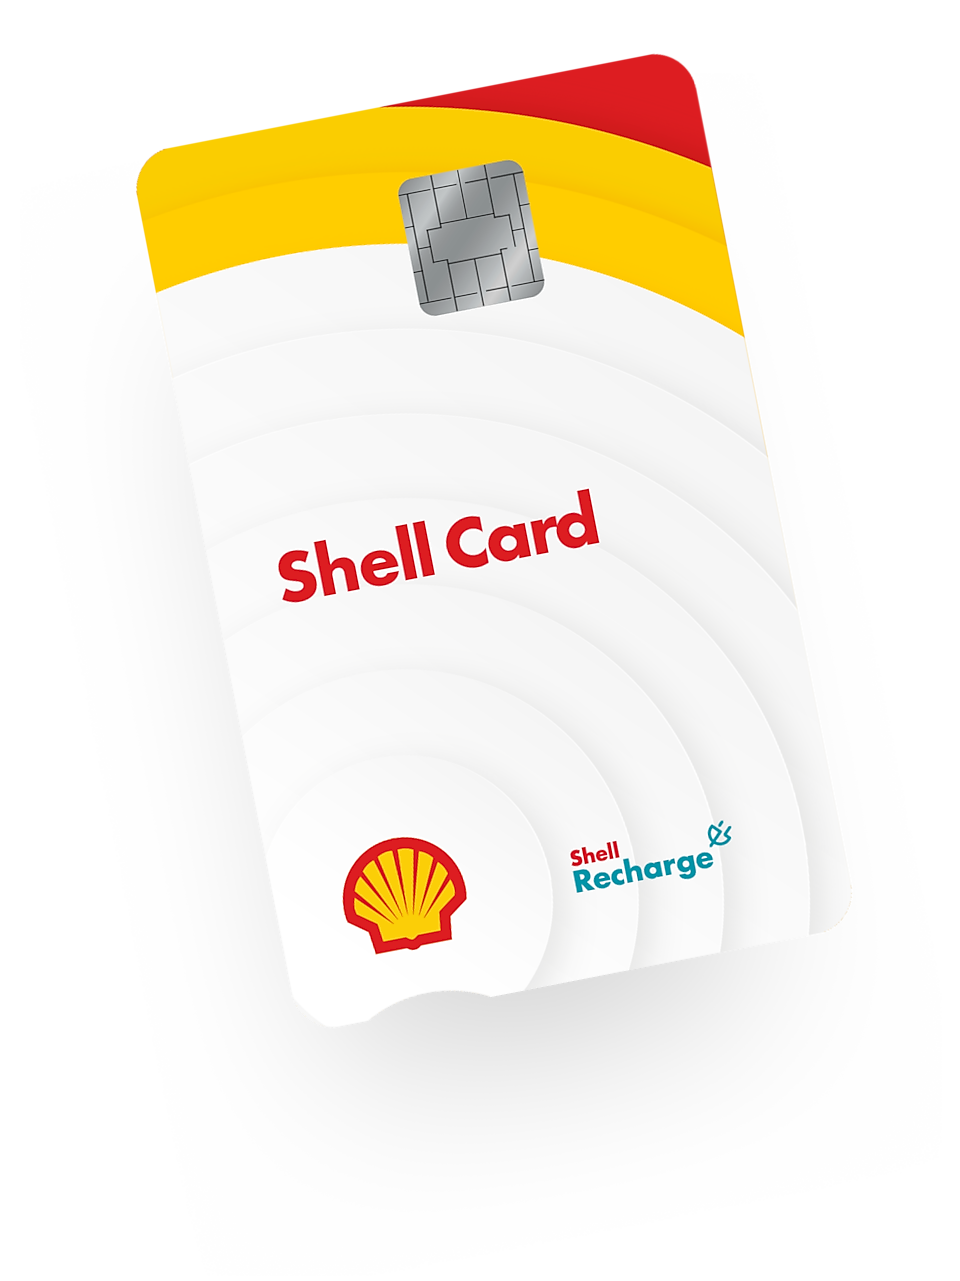 Shell Card in vergrößerter Darstellung